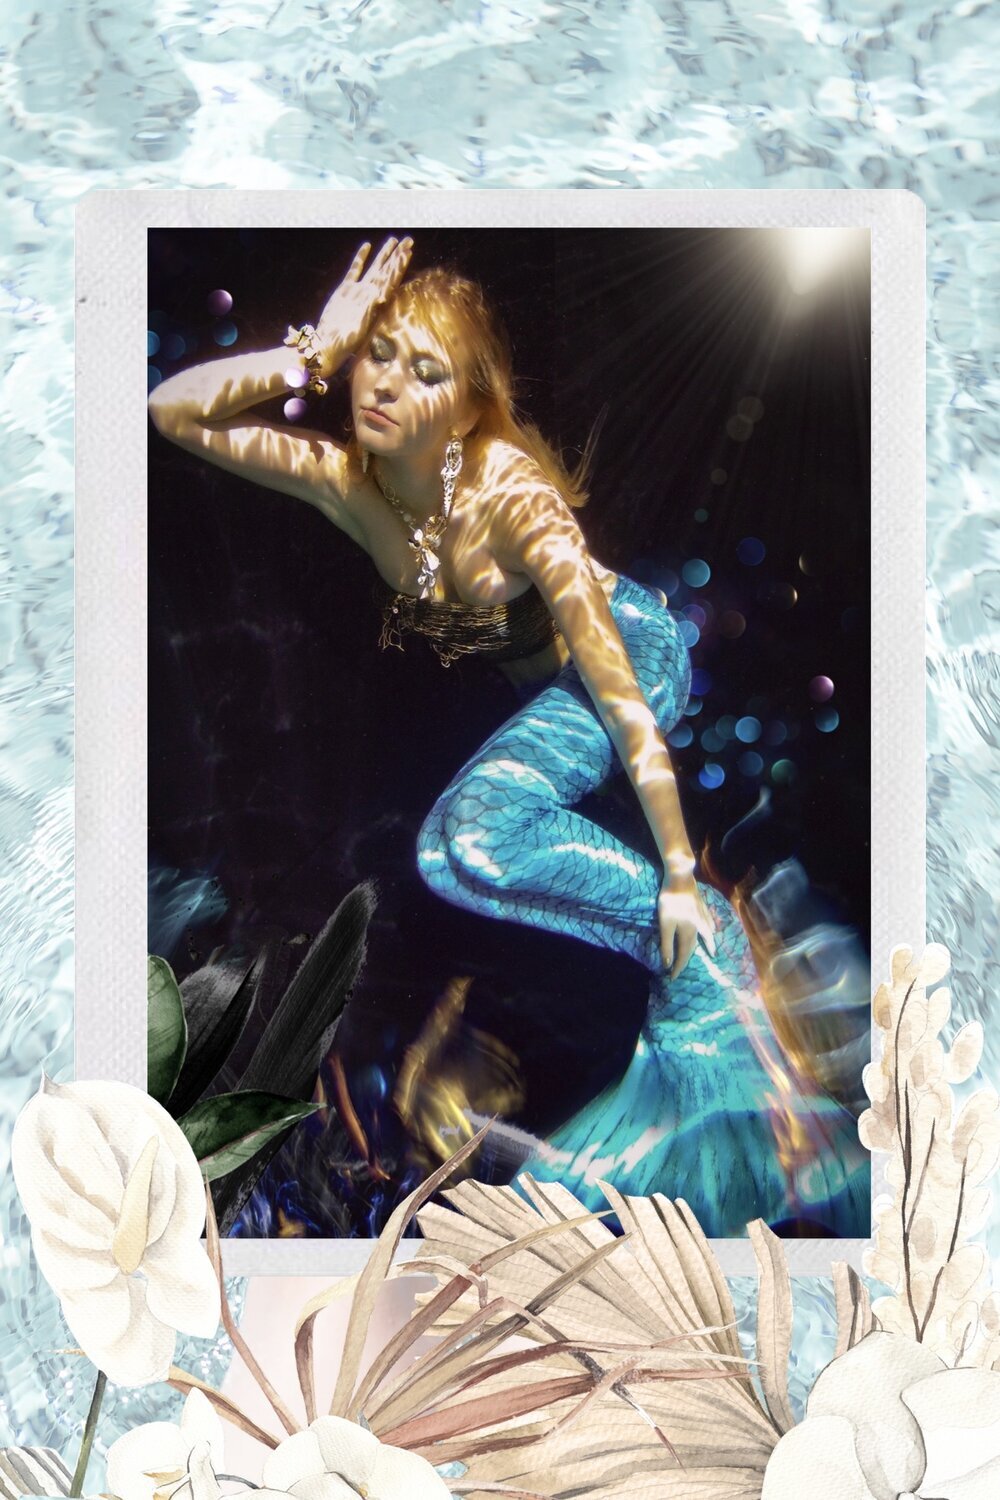 mermaid model wearing seashell jewelry